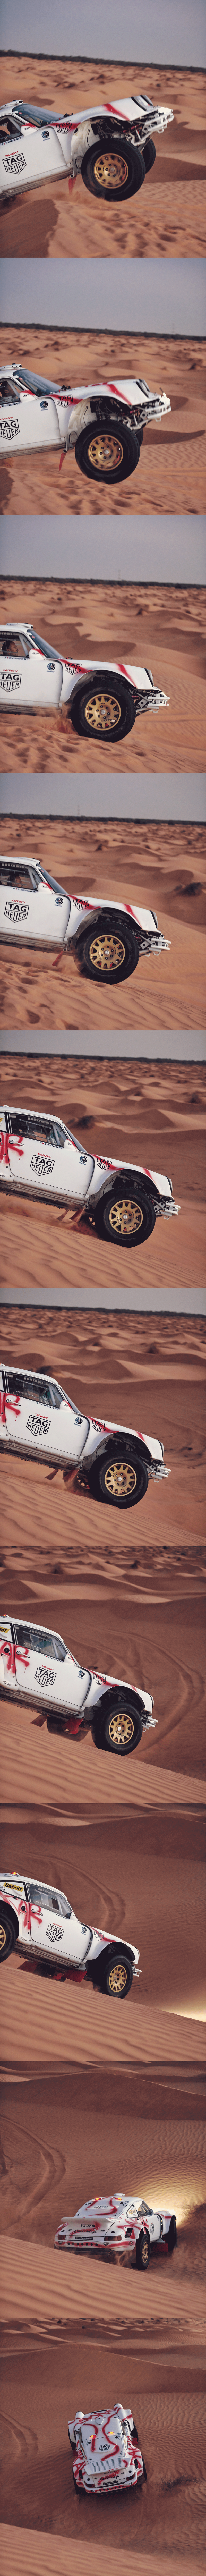 Road to Dakar #03 - Car&vintage